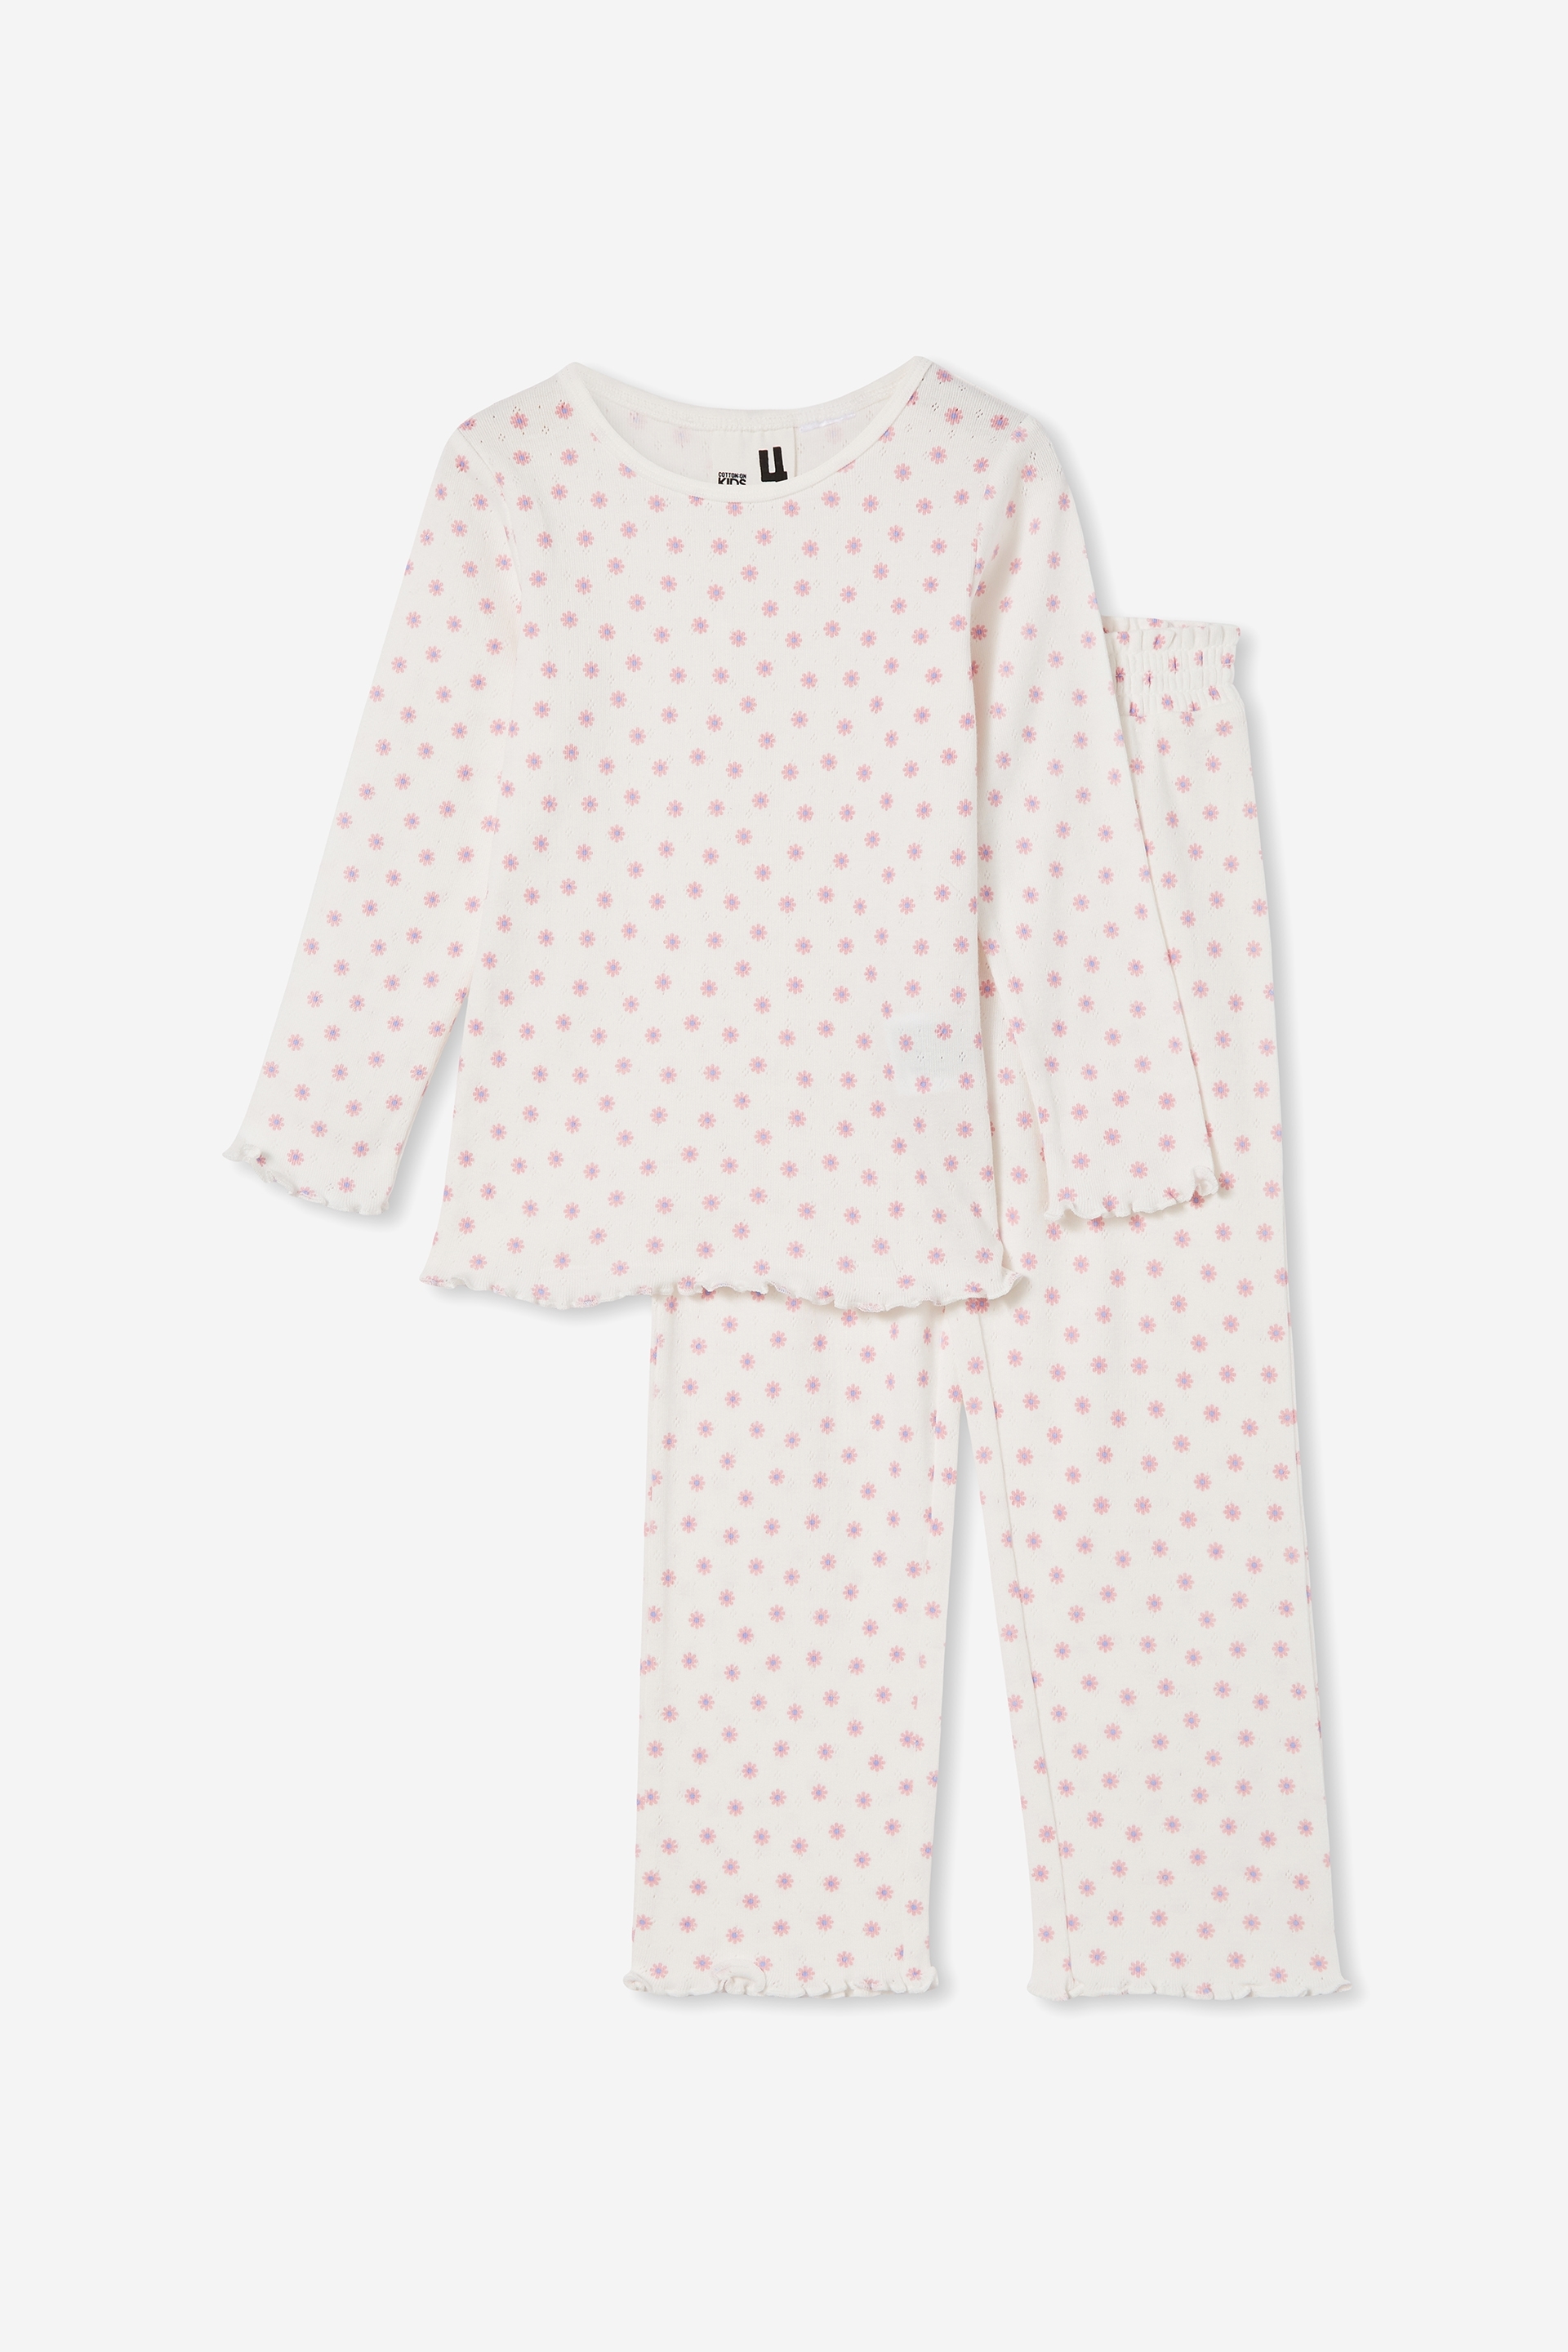 Cotton On Kids - Camilla Long Sleeve Pyjama Set - Vanilla/bruny daisy